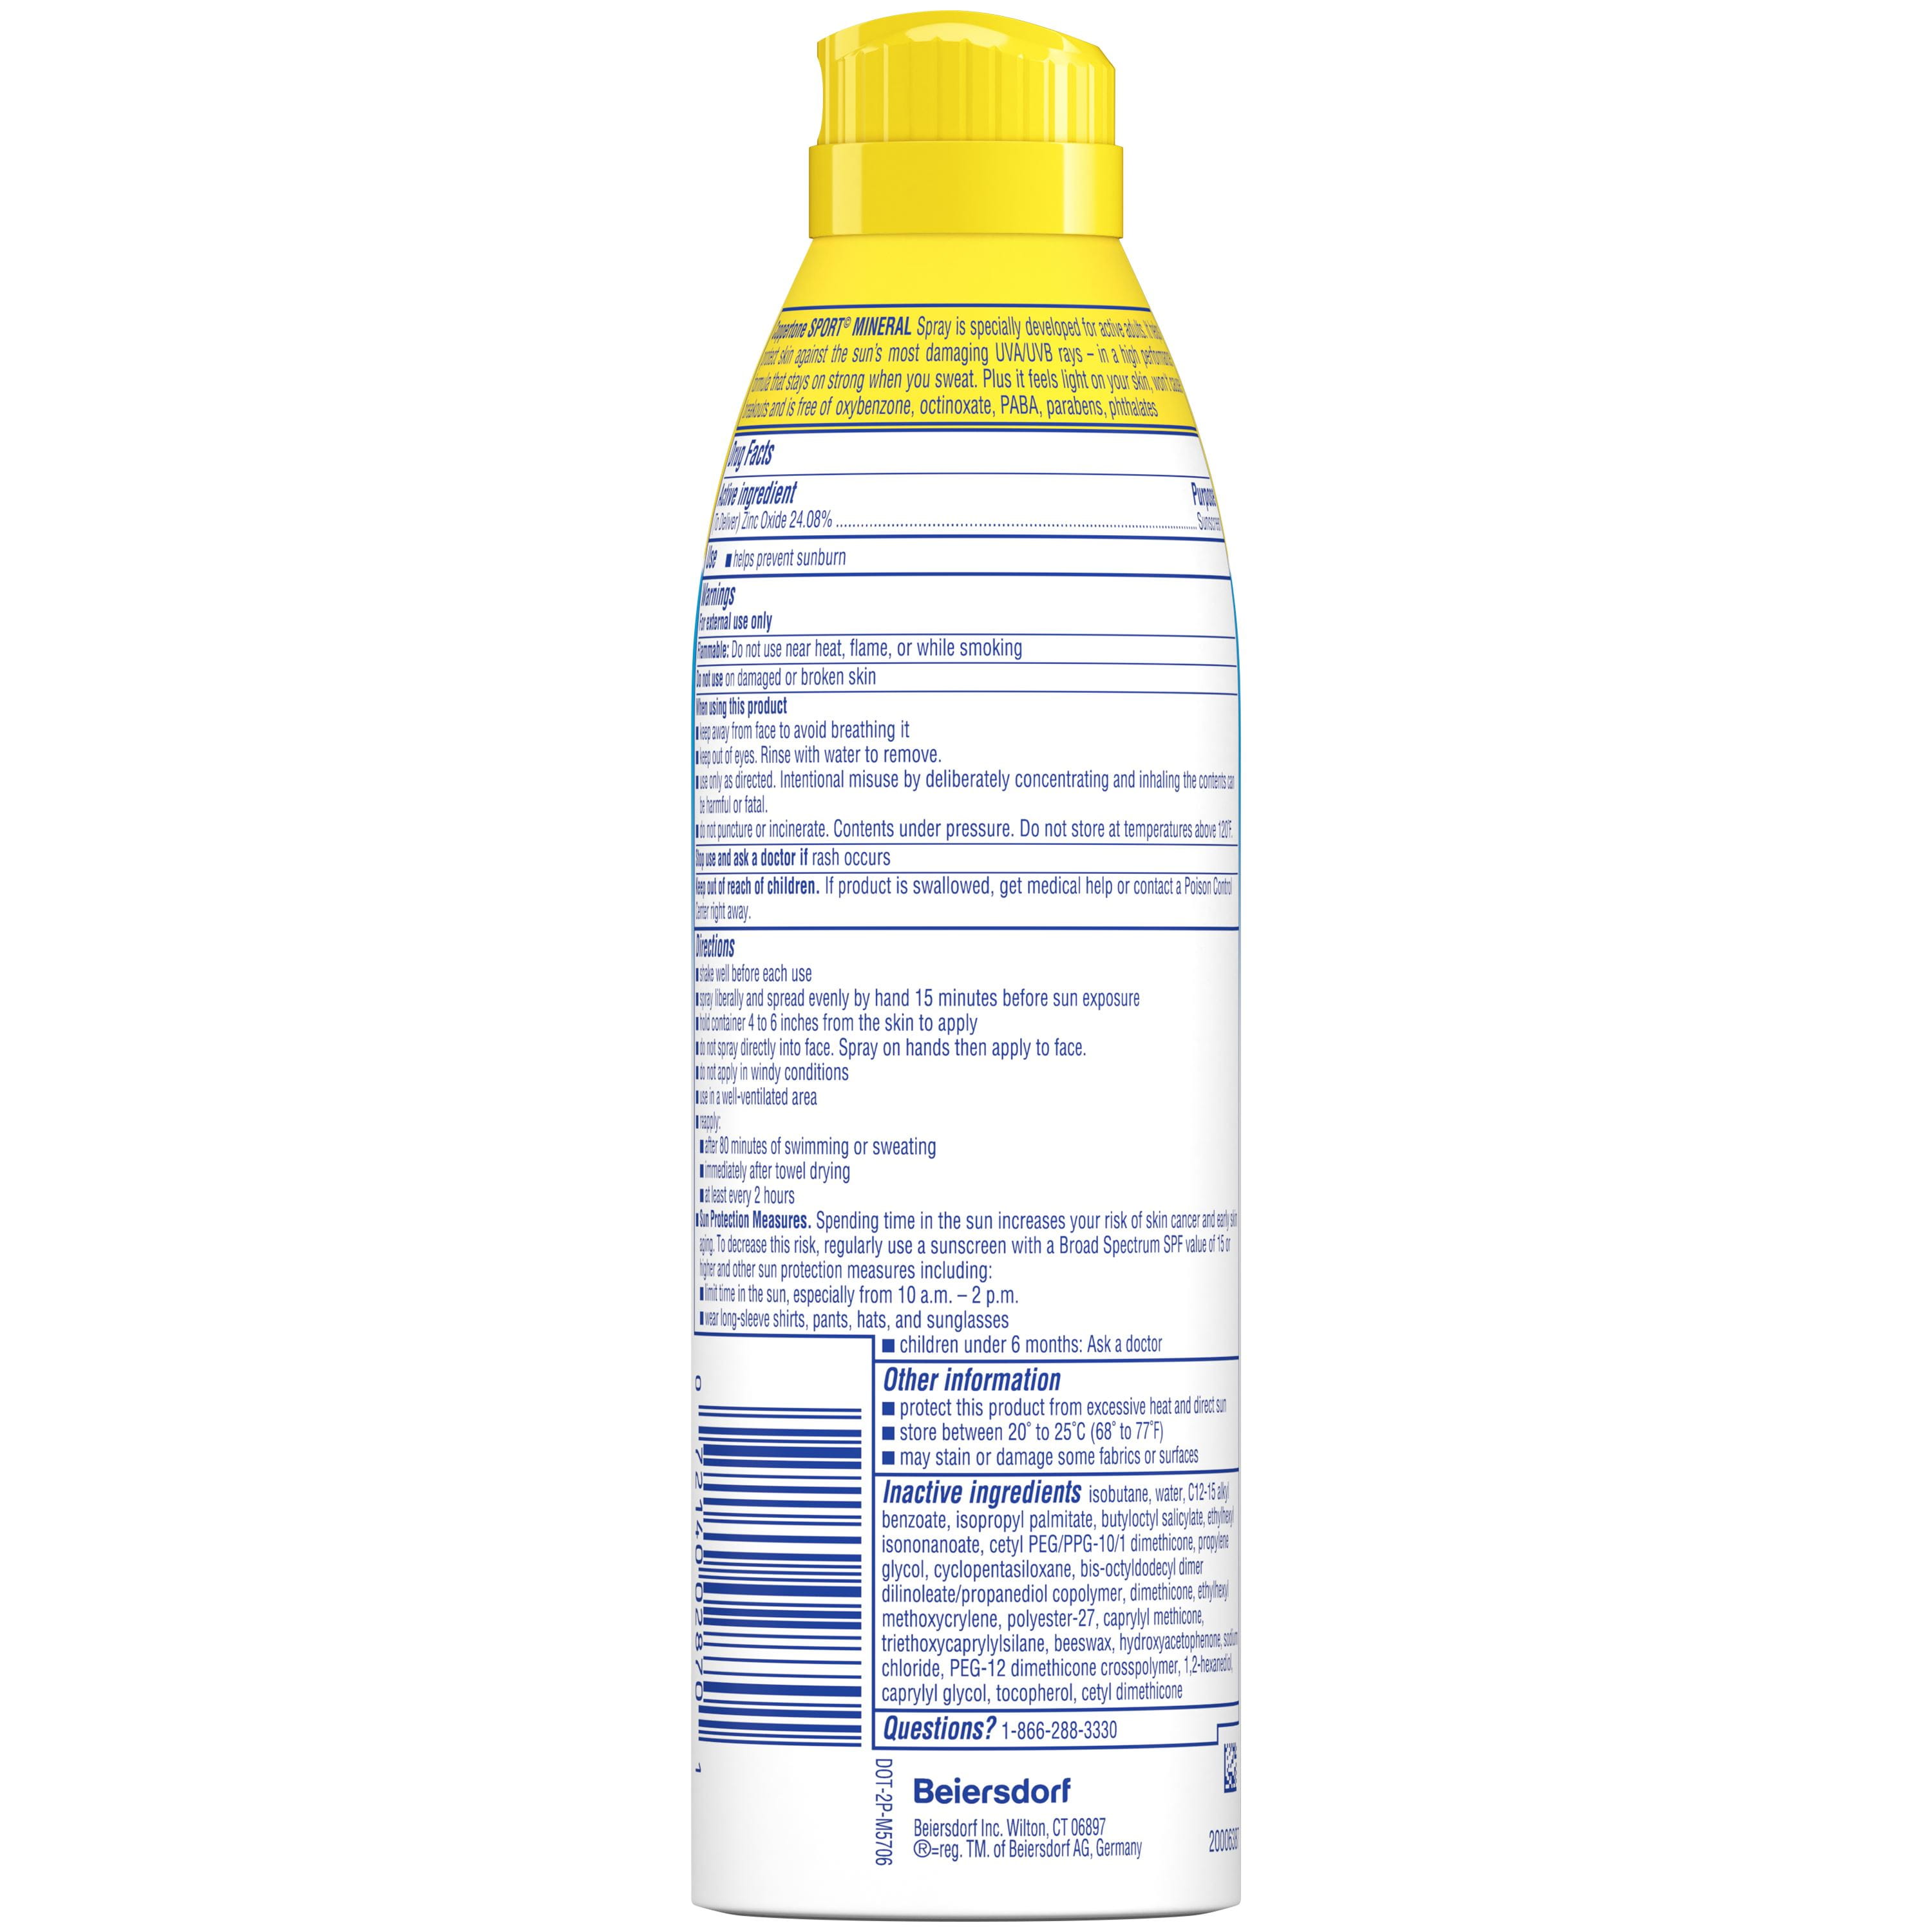 Coppertone Sport Mineral SPF 50 Sunscreen Spray